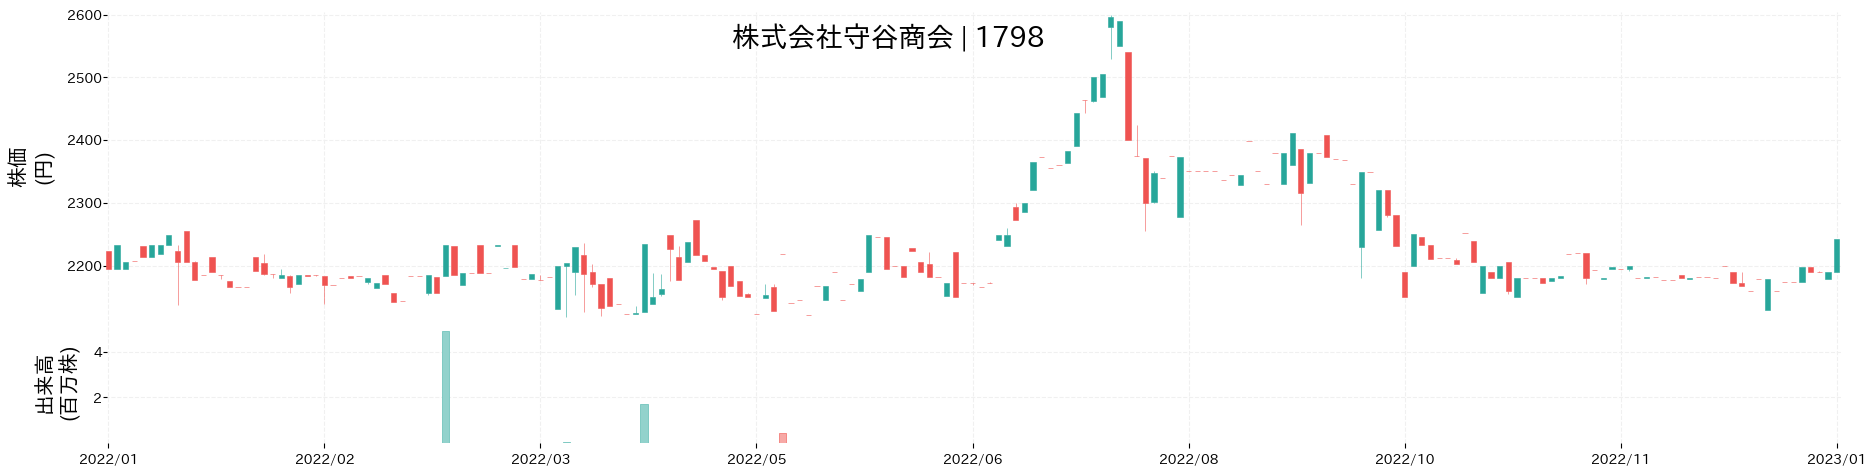 守谷商会の株価推移(2022)